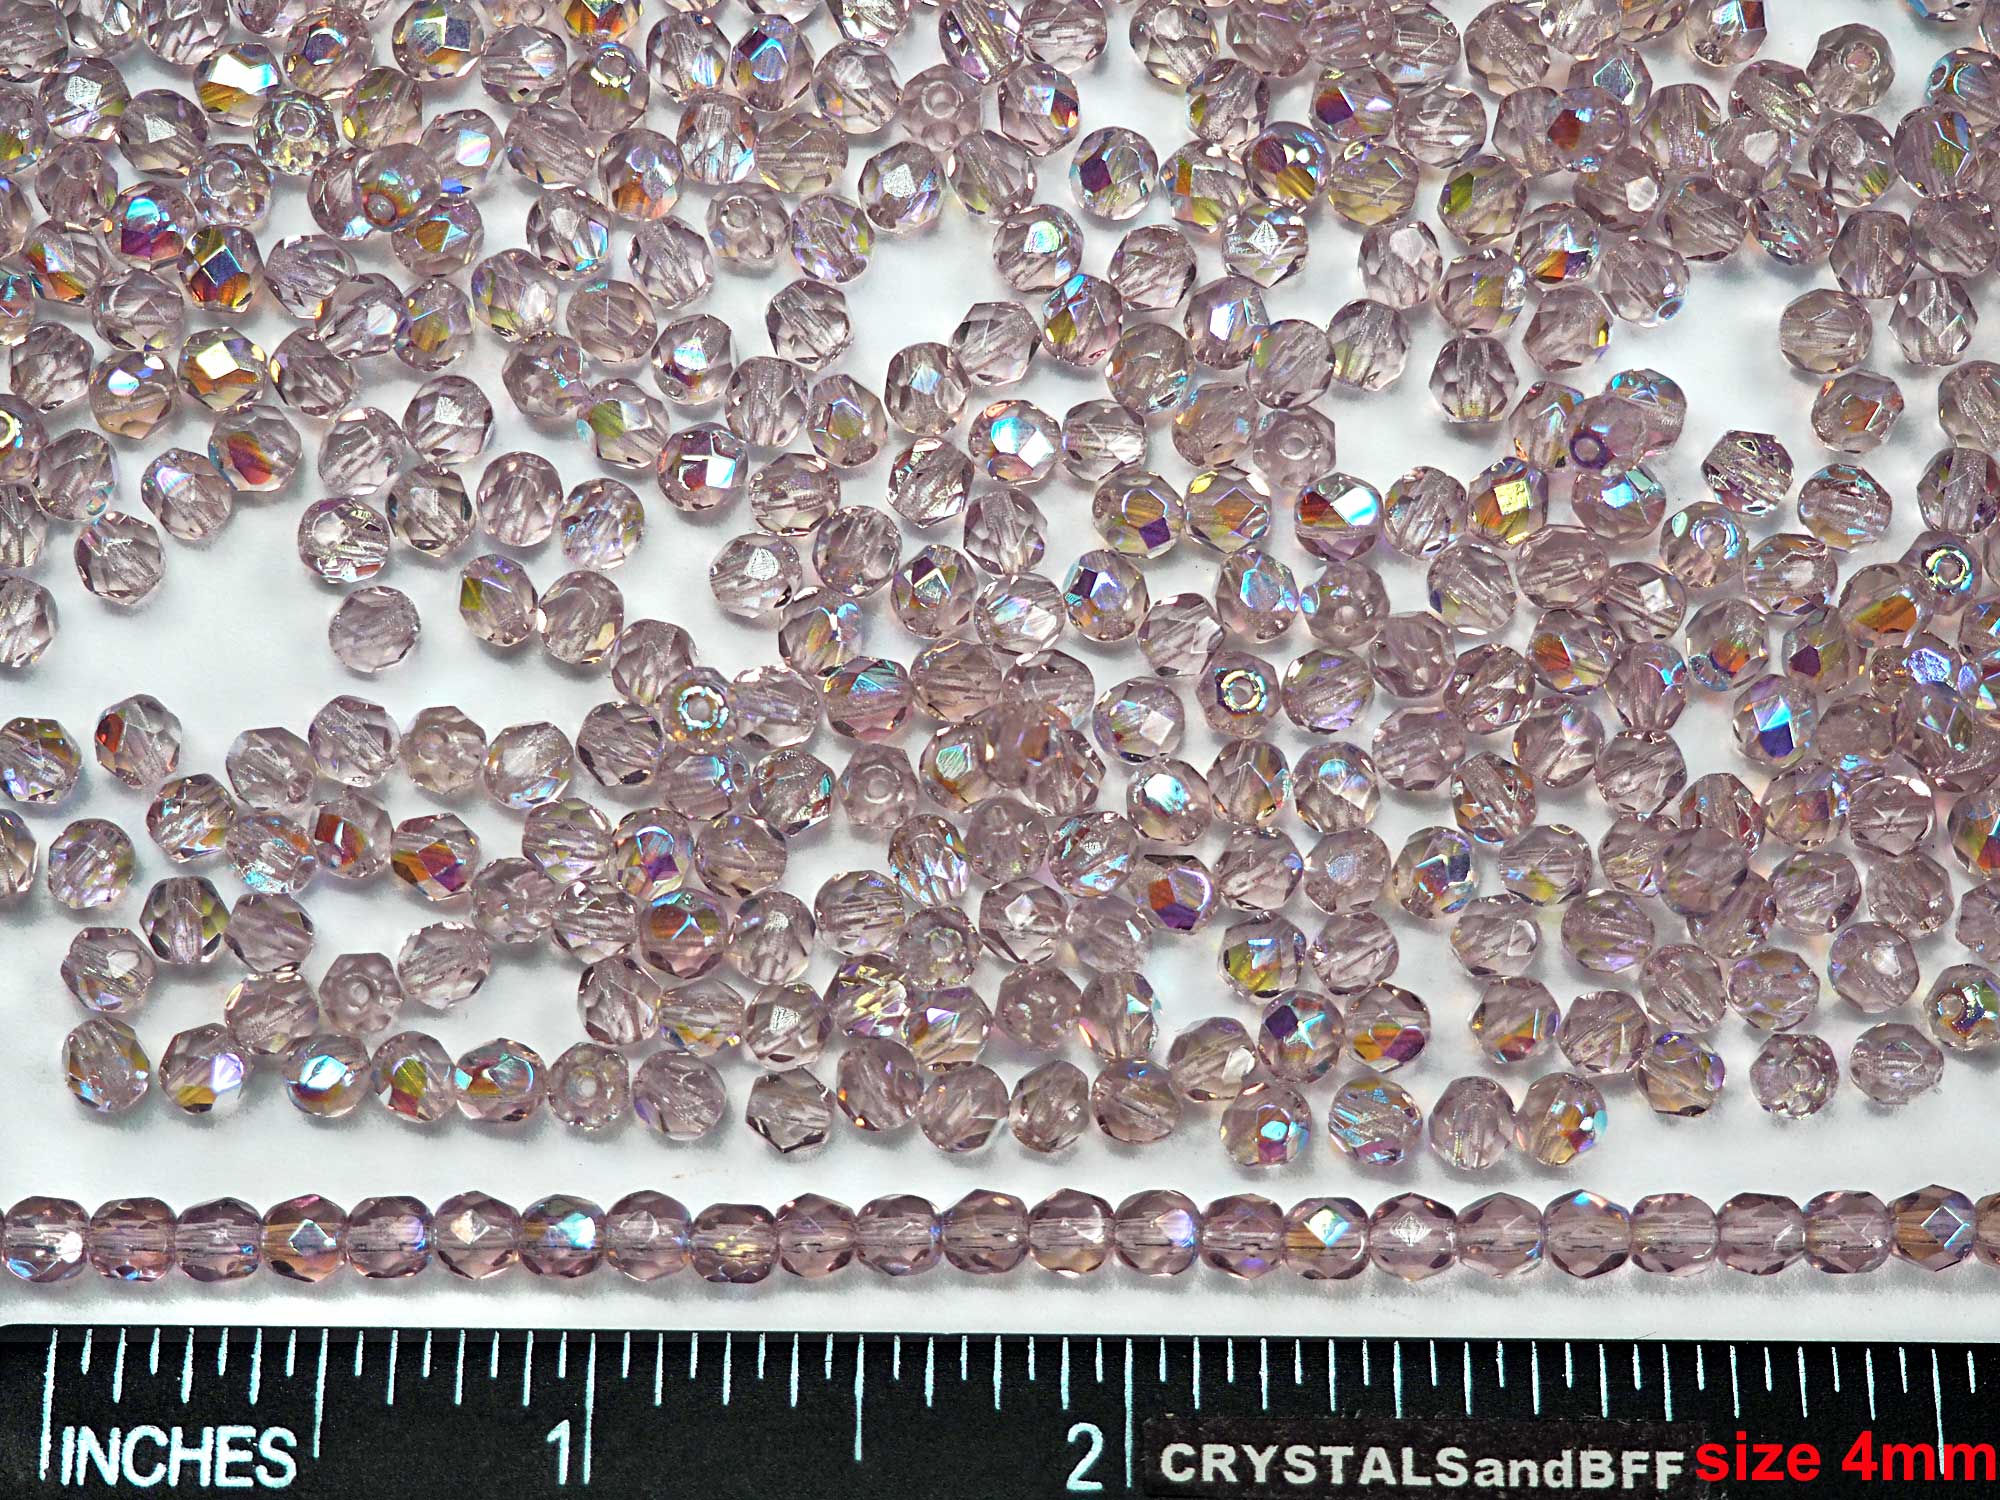 Light Amethyst AB, Preciosa Czech Glass Fire Polished Beads in sizes 4mm, 6mm